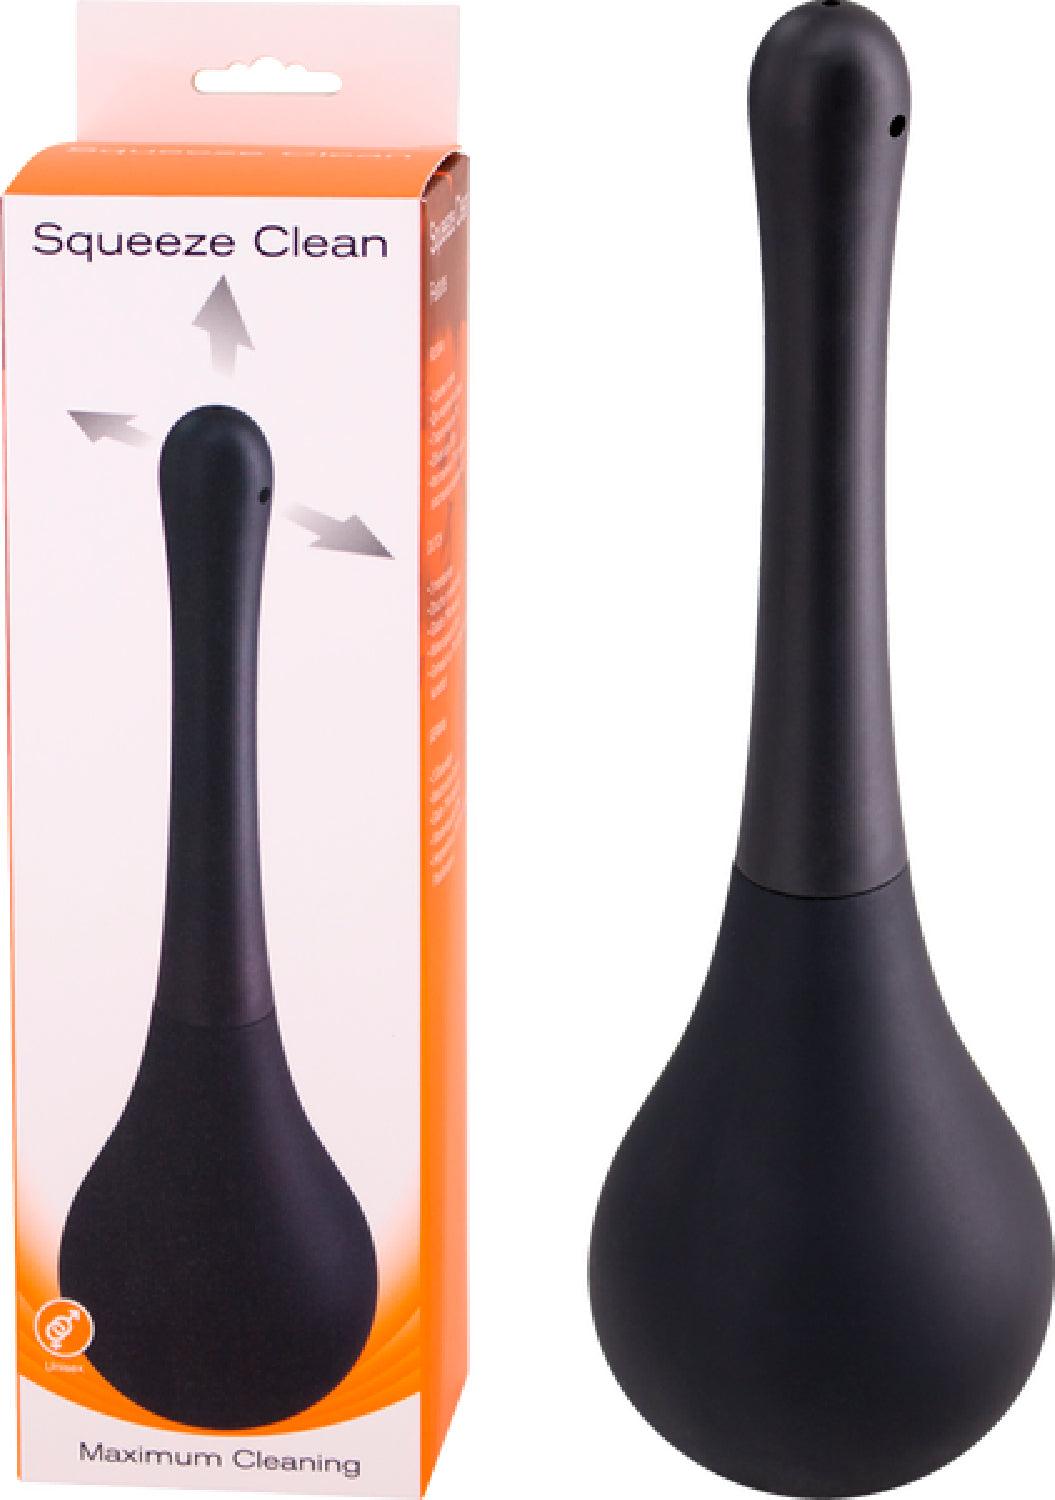 Squeeze Clean - Take A Peek